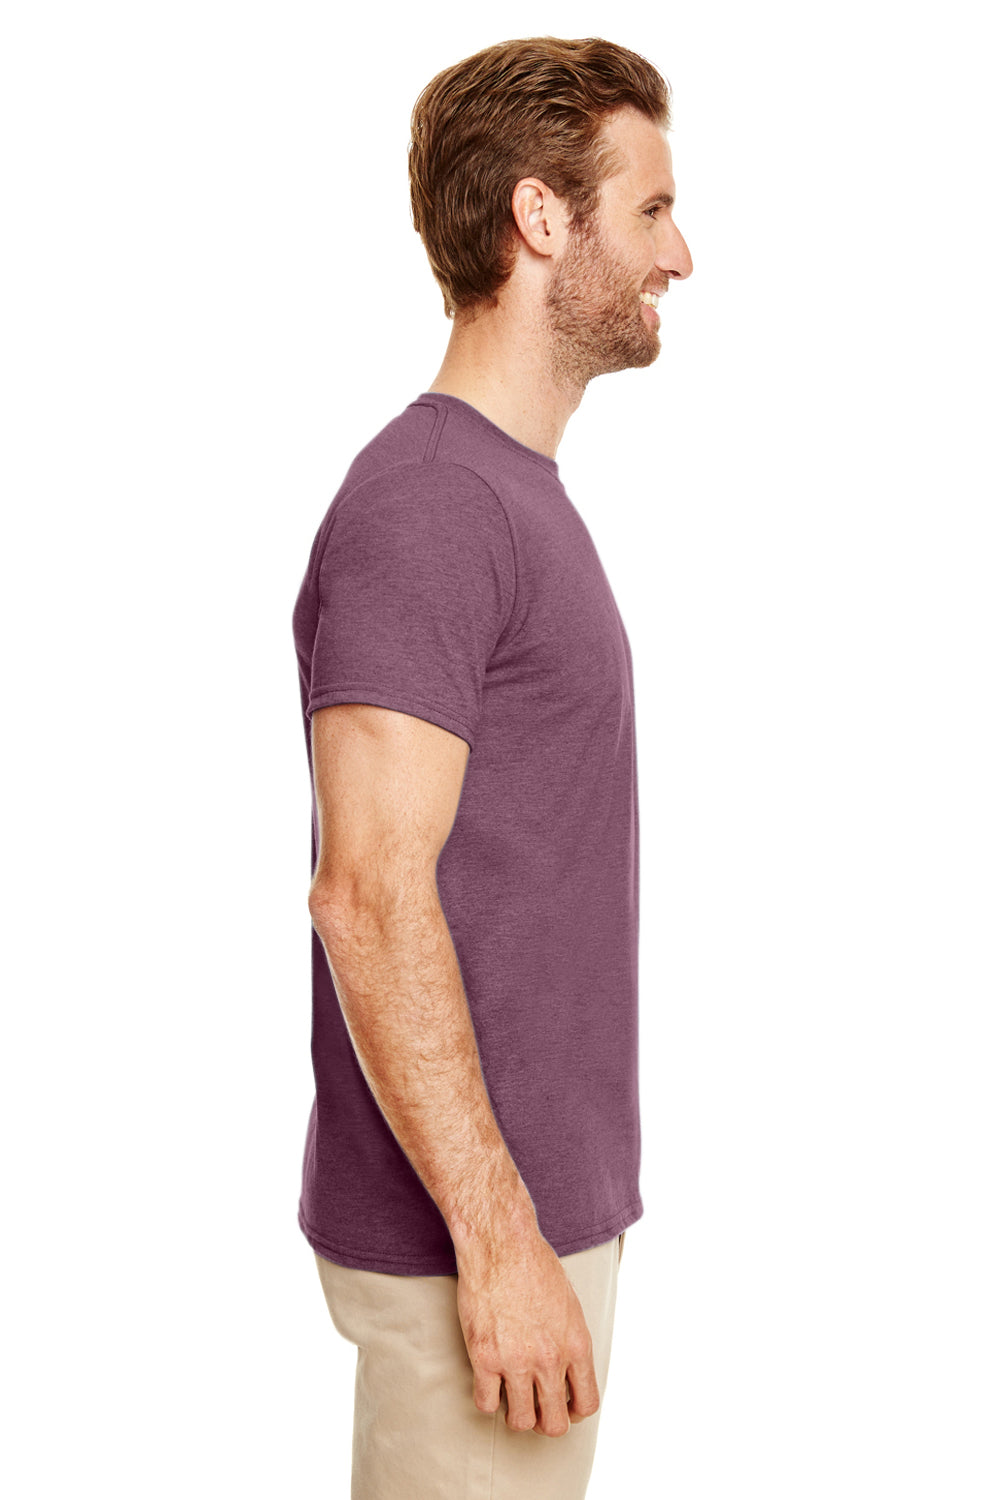 Gildan G640 Mens Softstyle Short Sleeve Crewneck T-Shirt Heather Maroon Side